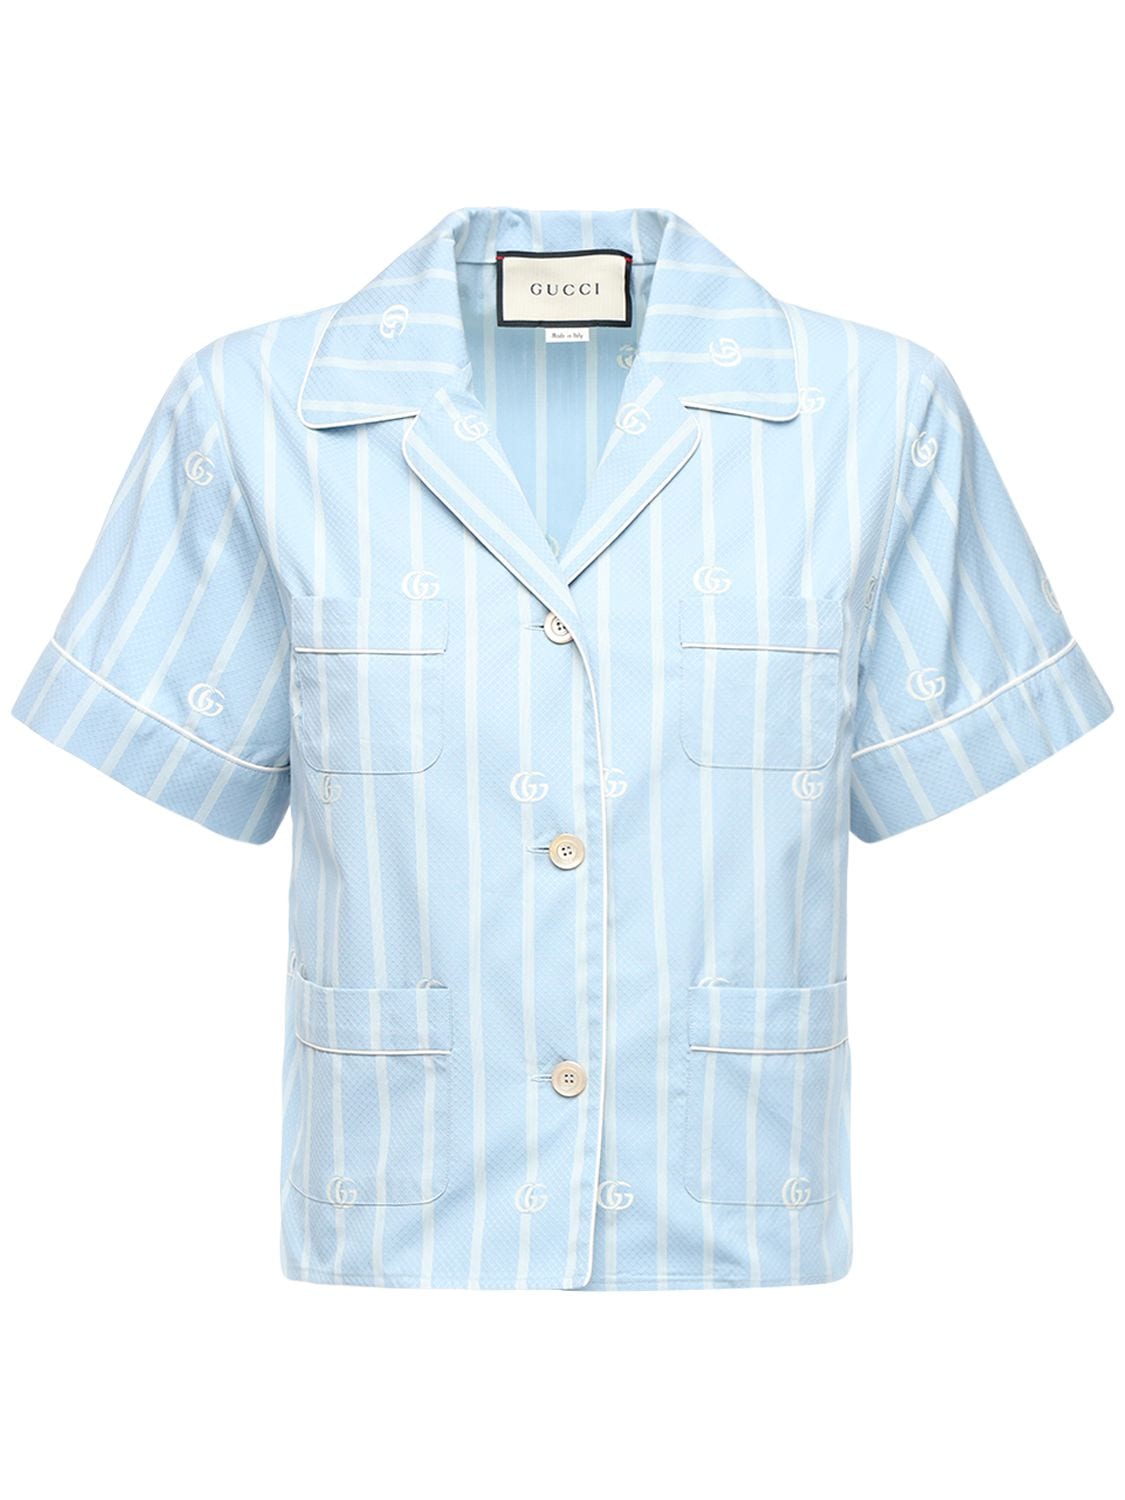 Gucci Striped Gg Cotton Bowling Shirt In Light Blue